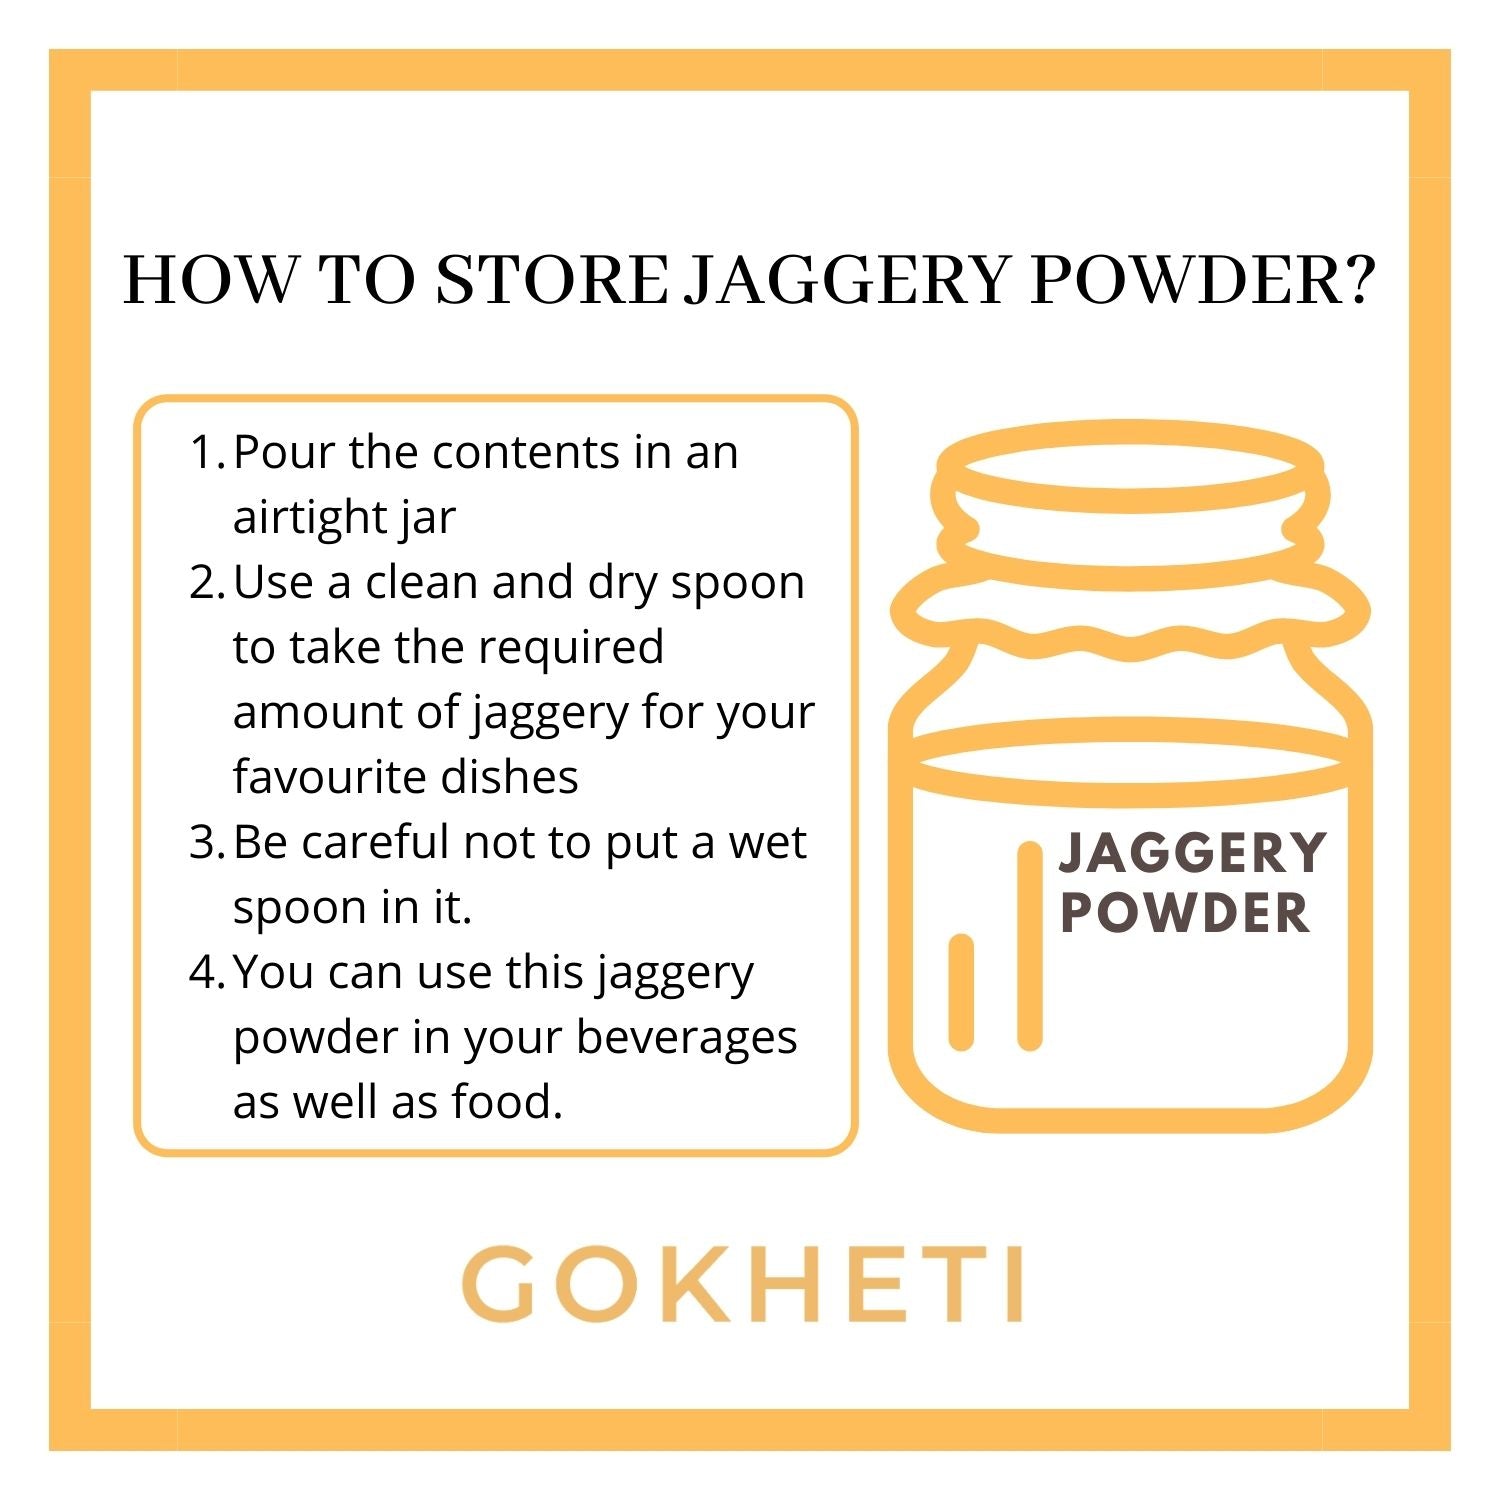 Buy Organic Jaggery Powder in Singapore